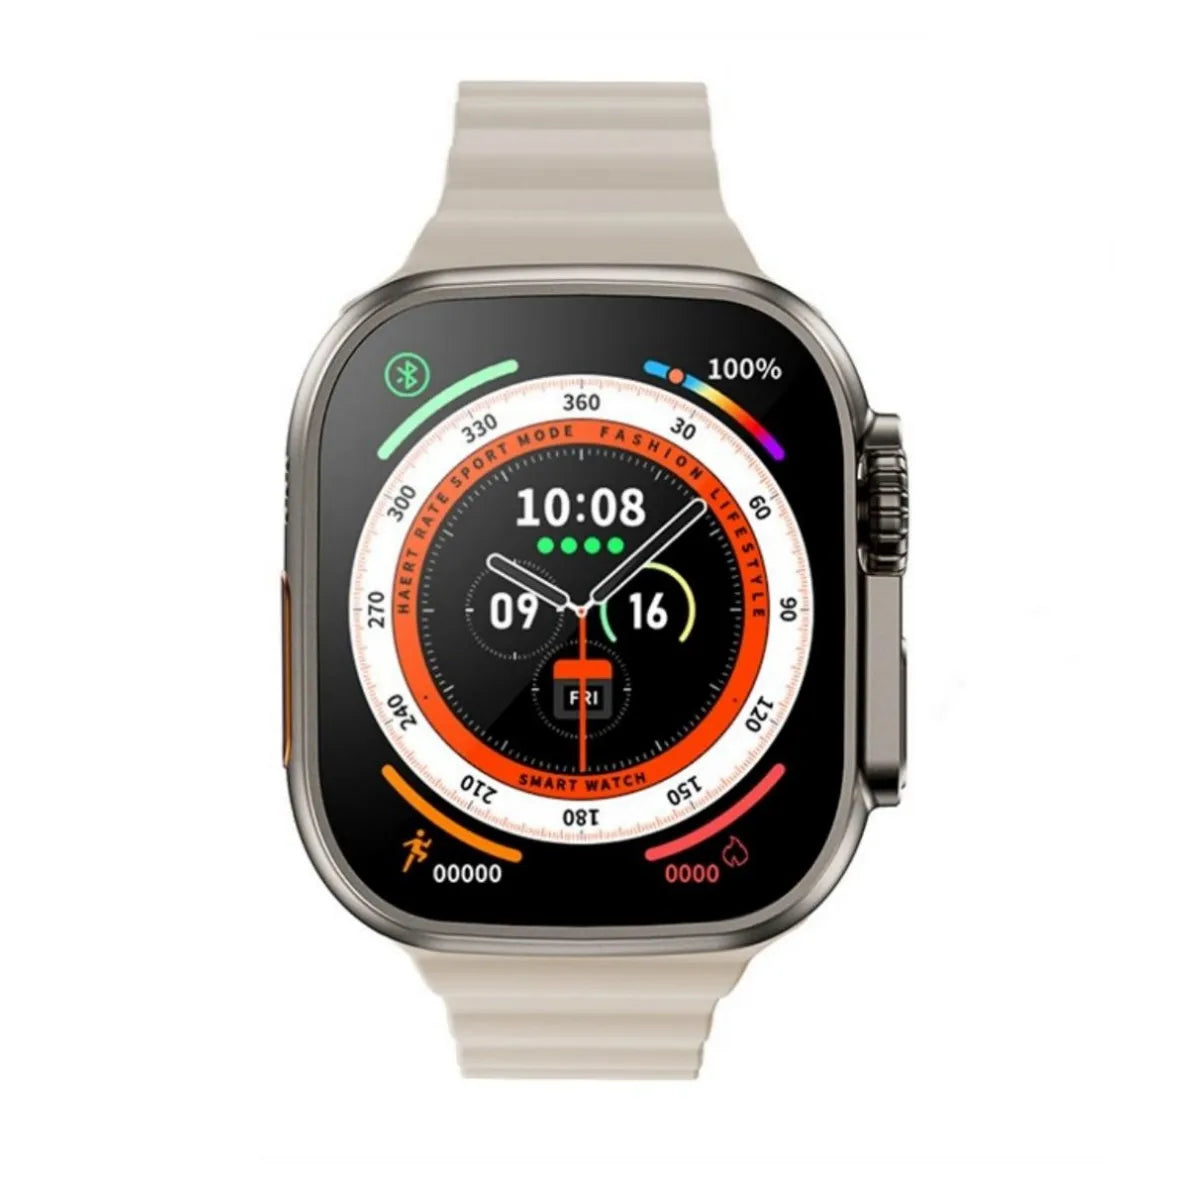 Relógio Inteligente 9 Ultra Pro Max Gen 2: Tecnologia Avançada no seu Pulso - IA De Ofertas